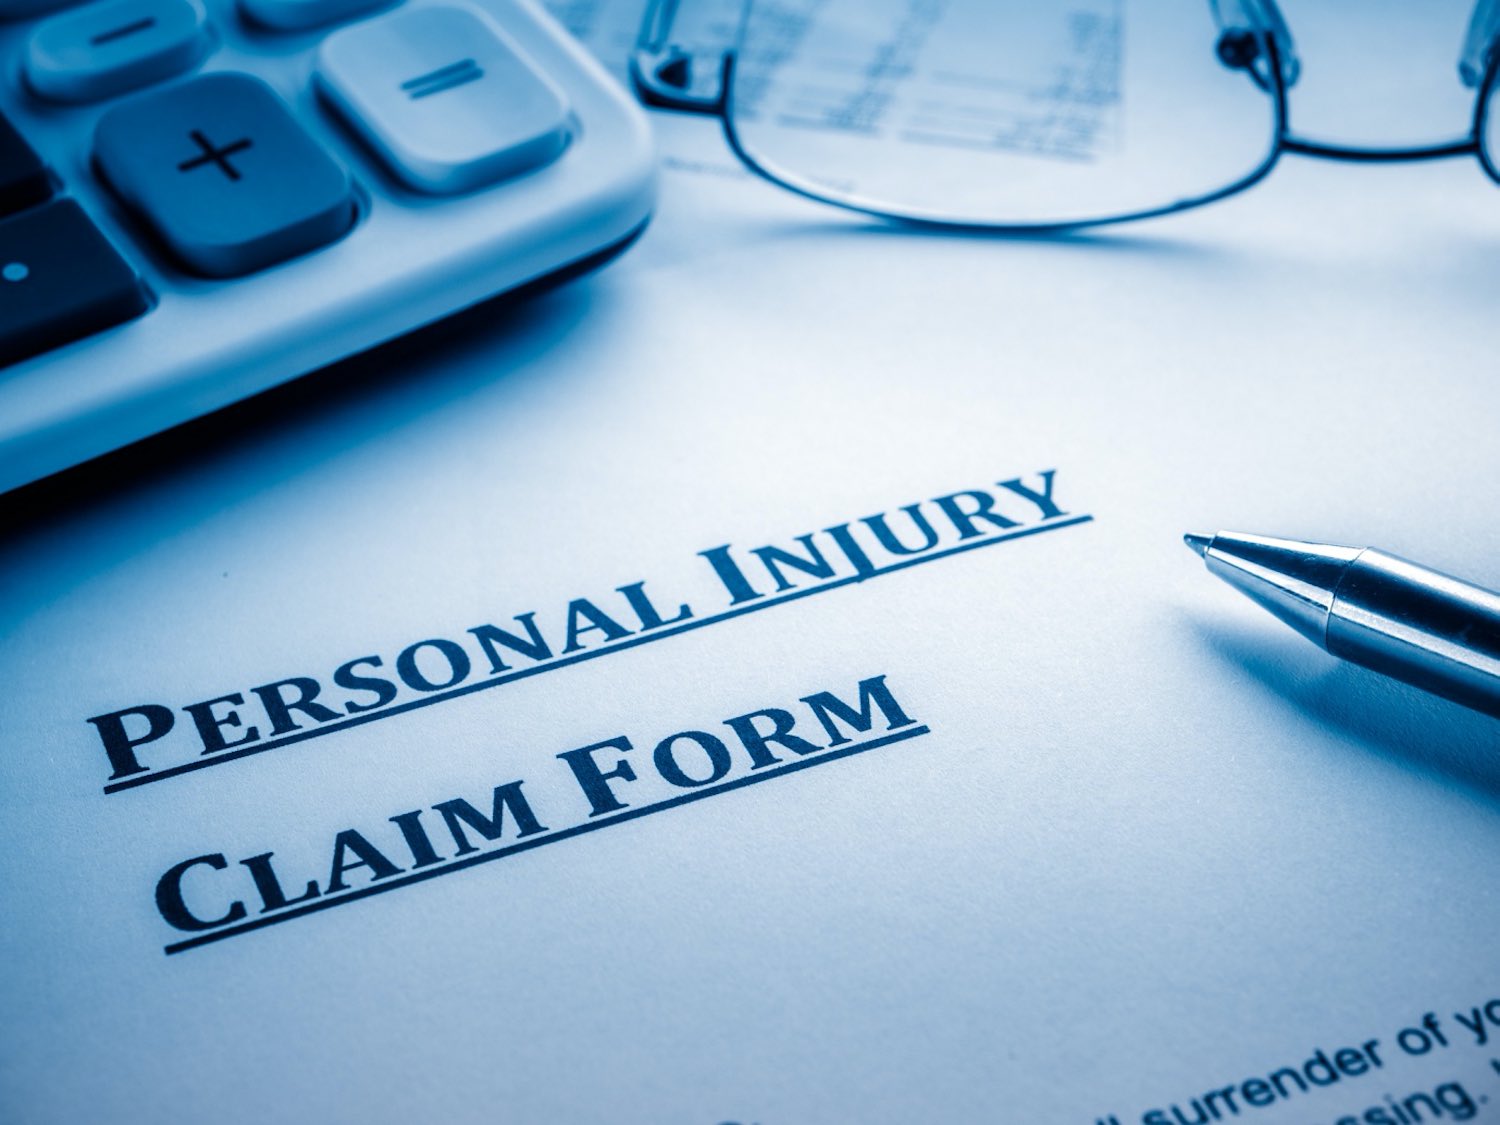 Personal Injury Claim Process